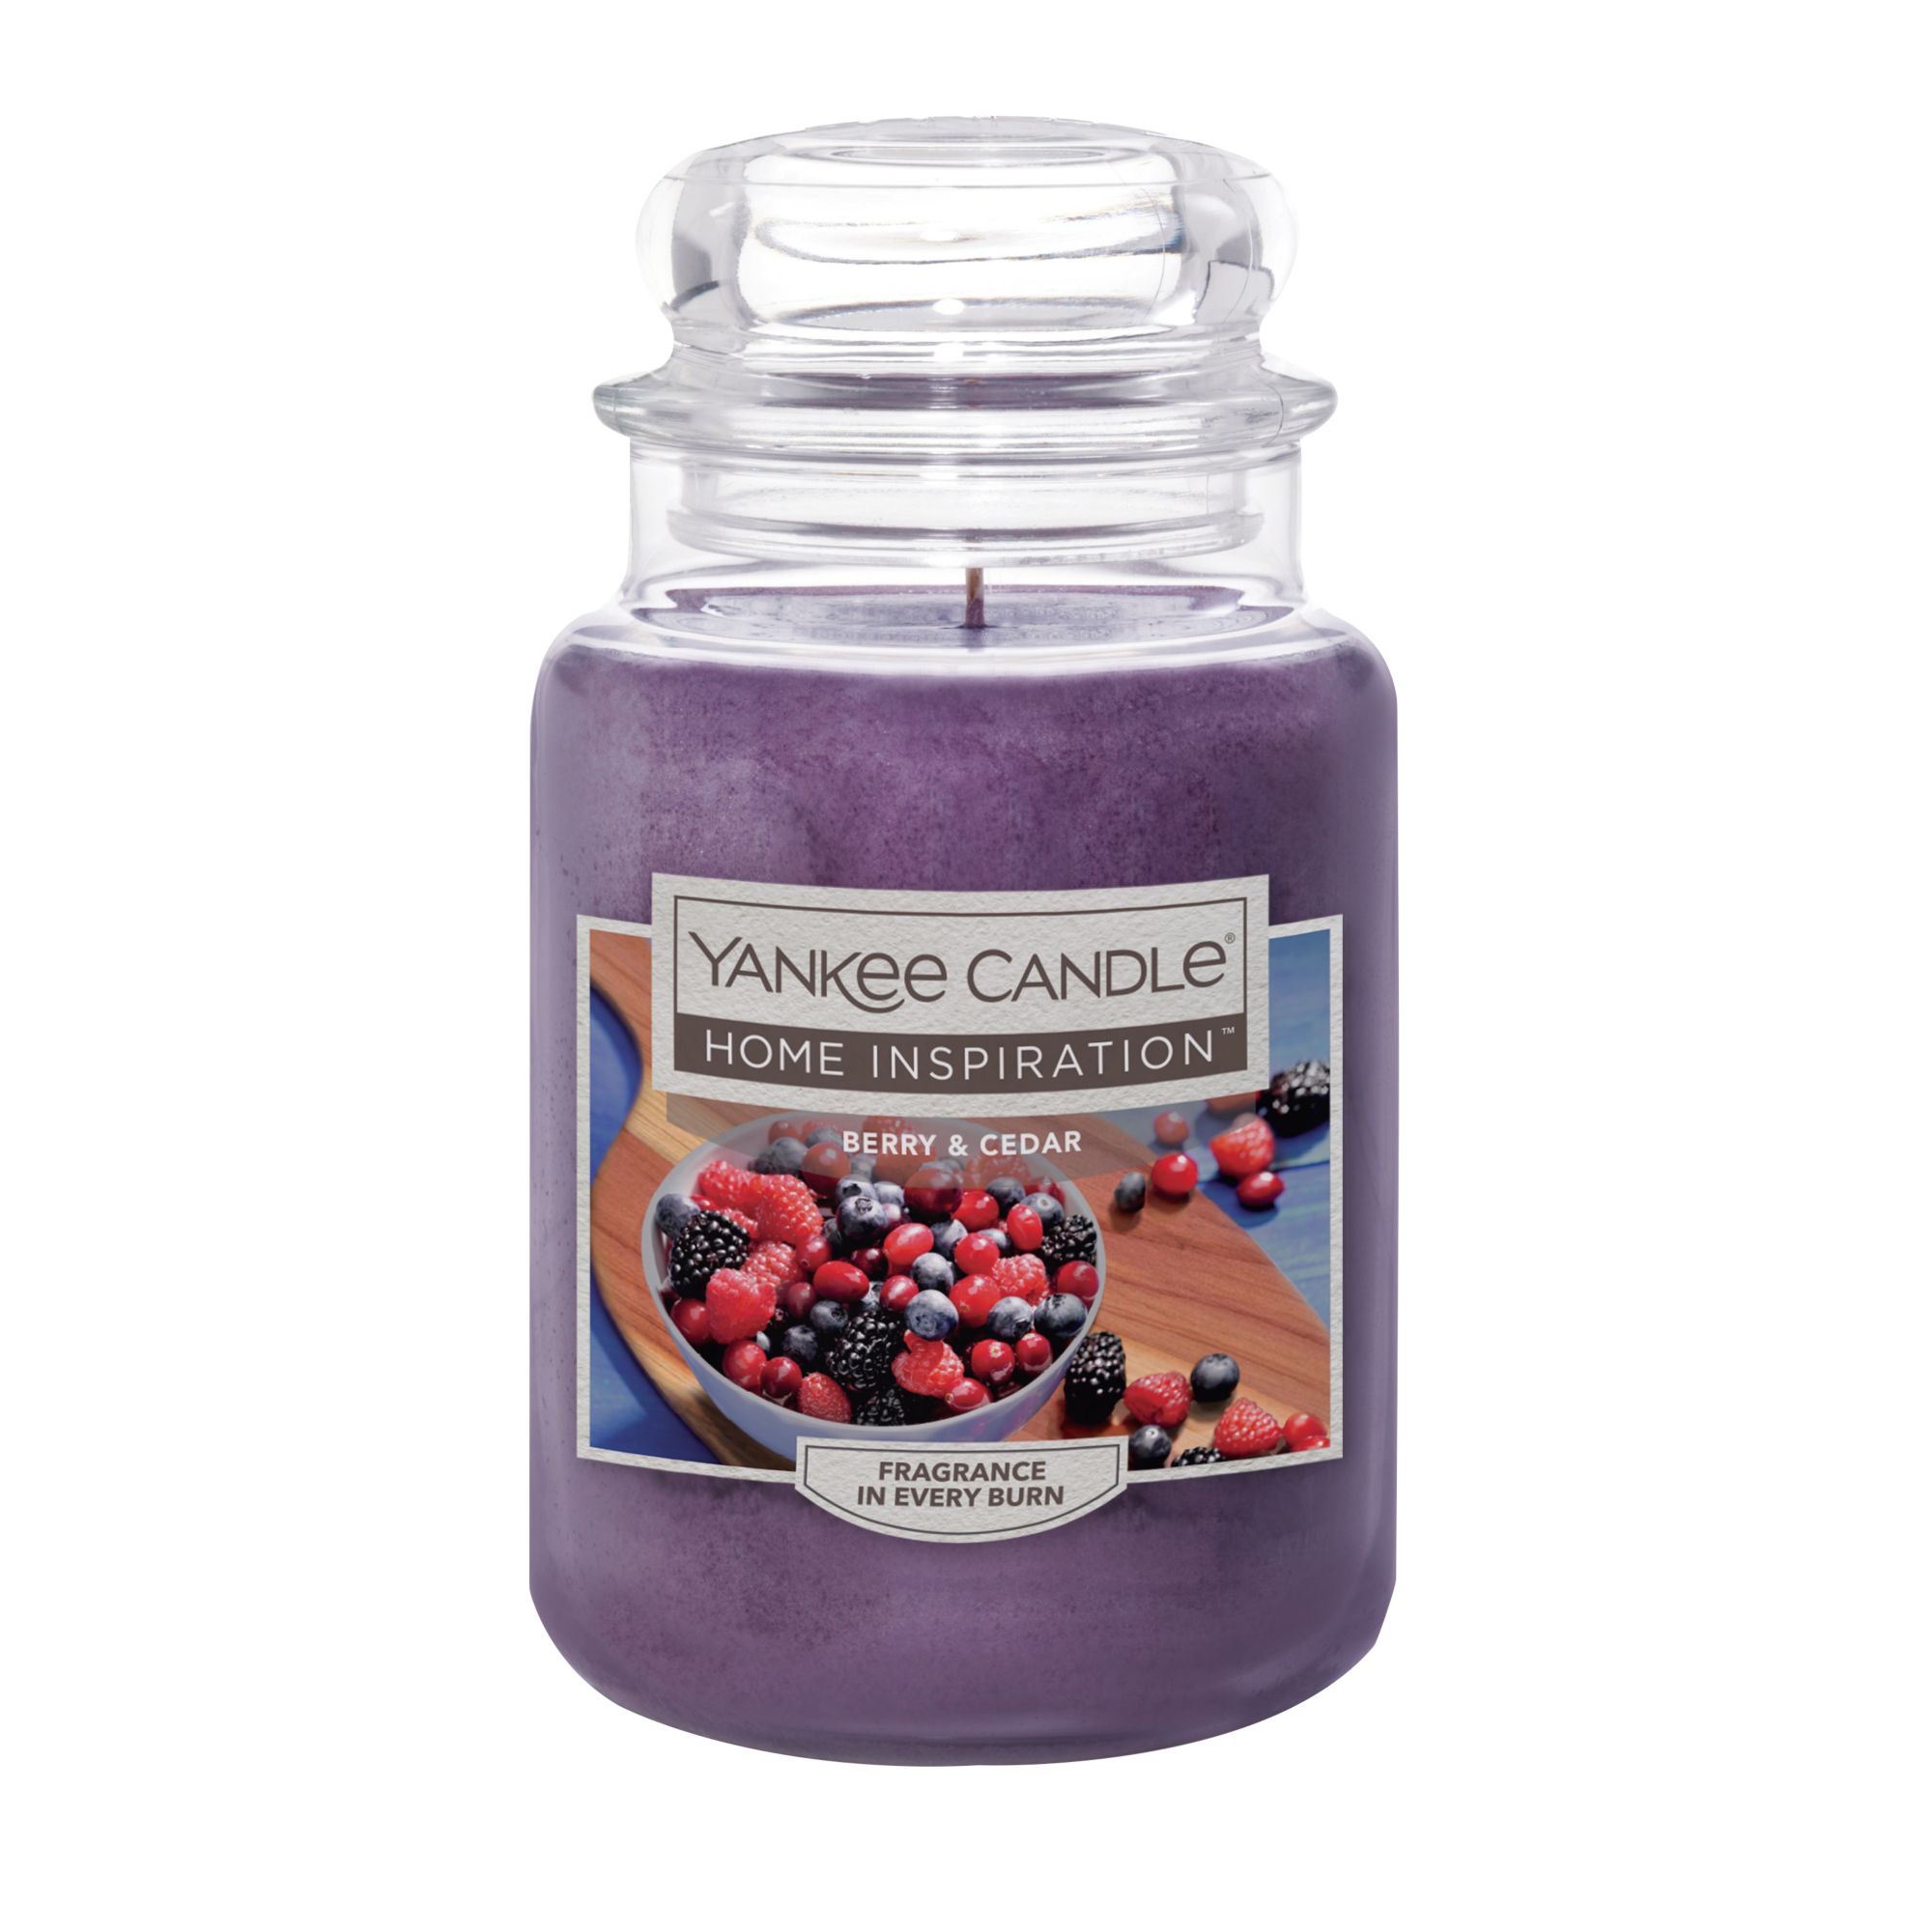 Yankee Candle Jar Candle, 19 oz., Pink Island Sunset